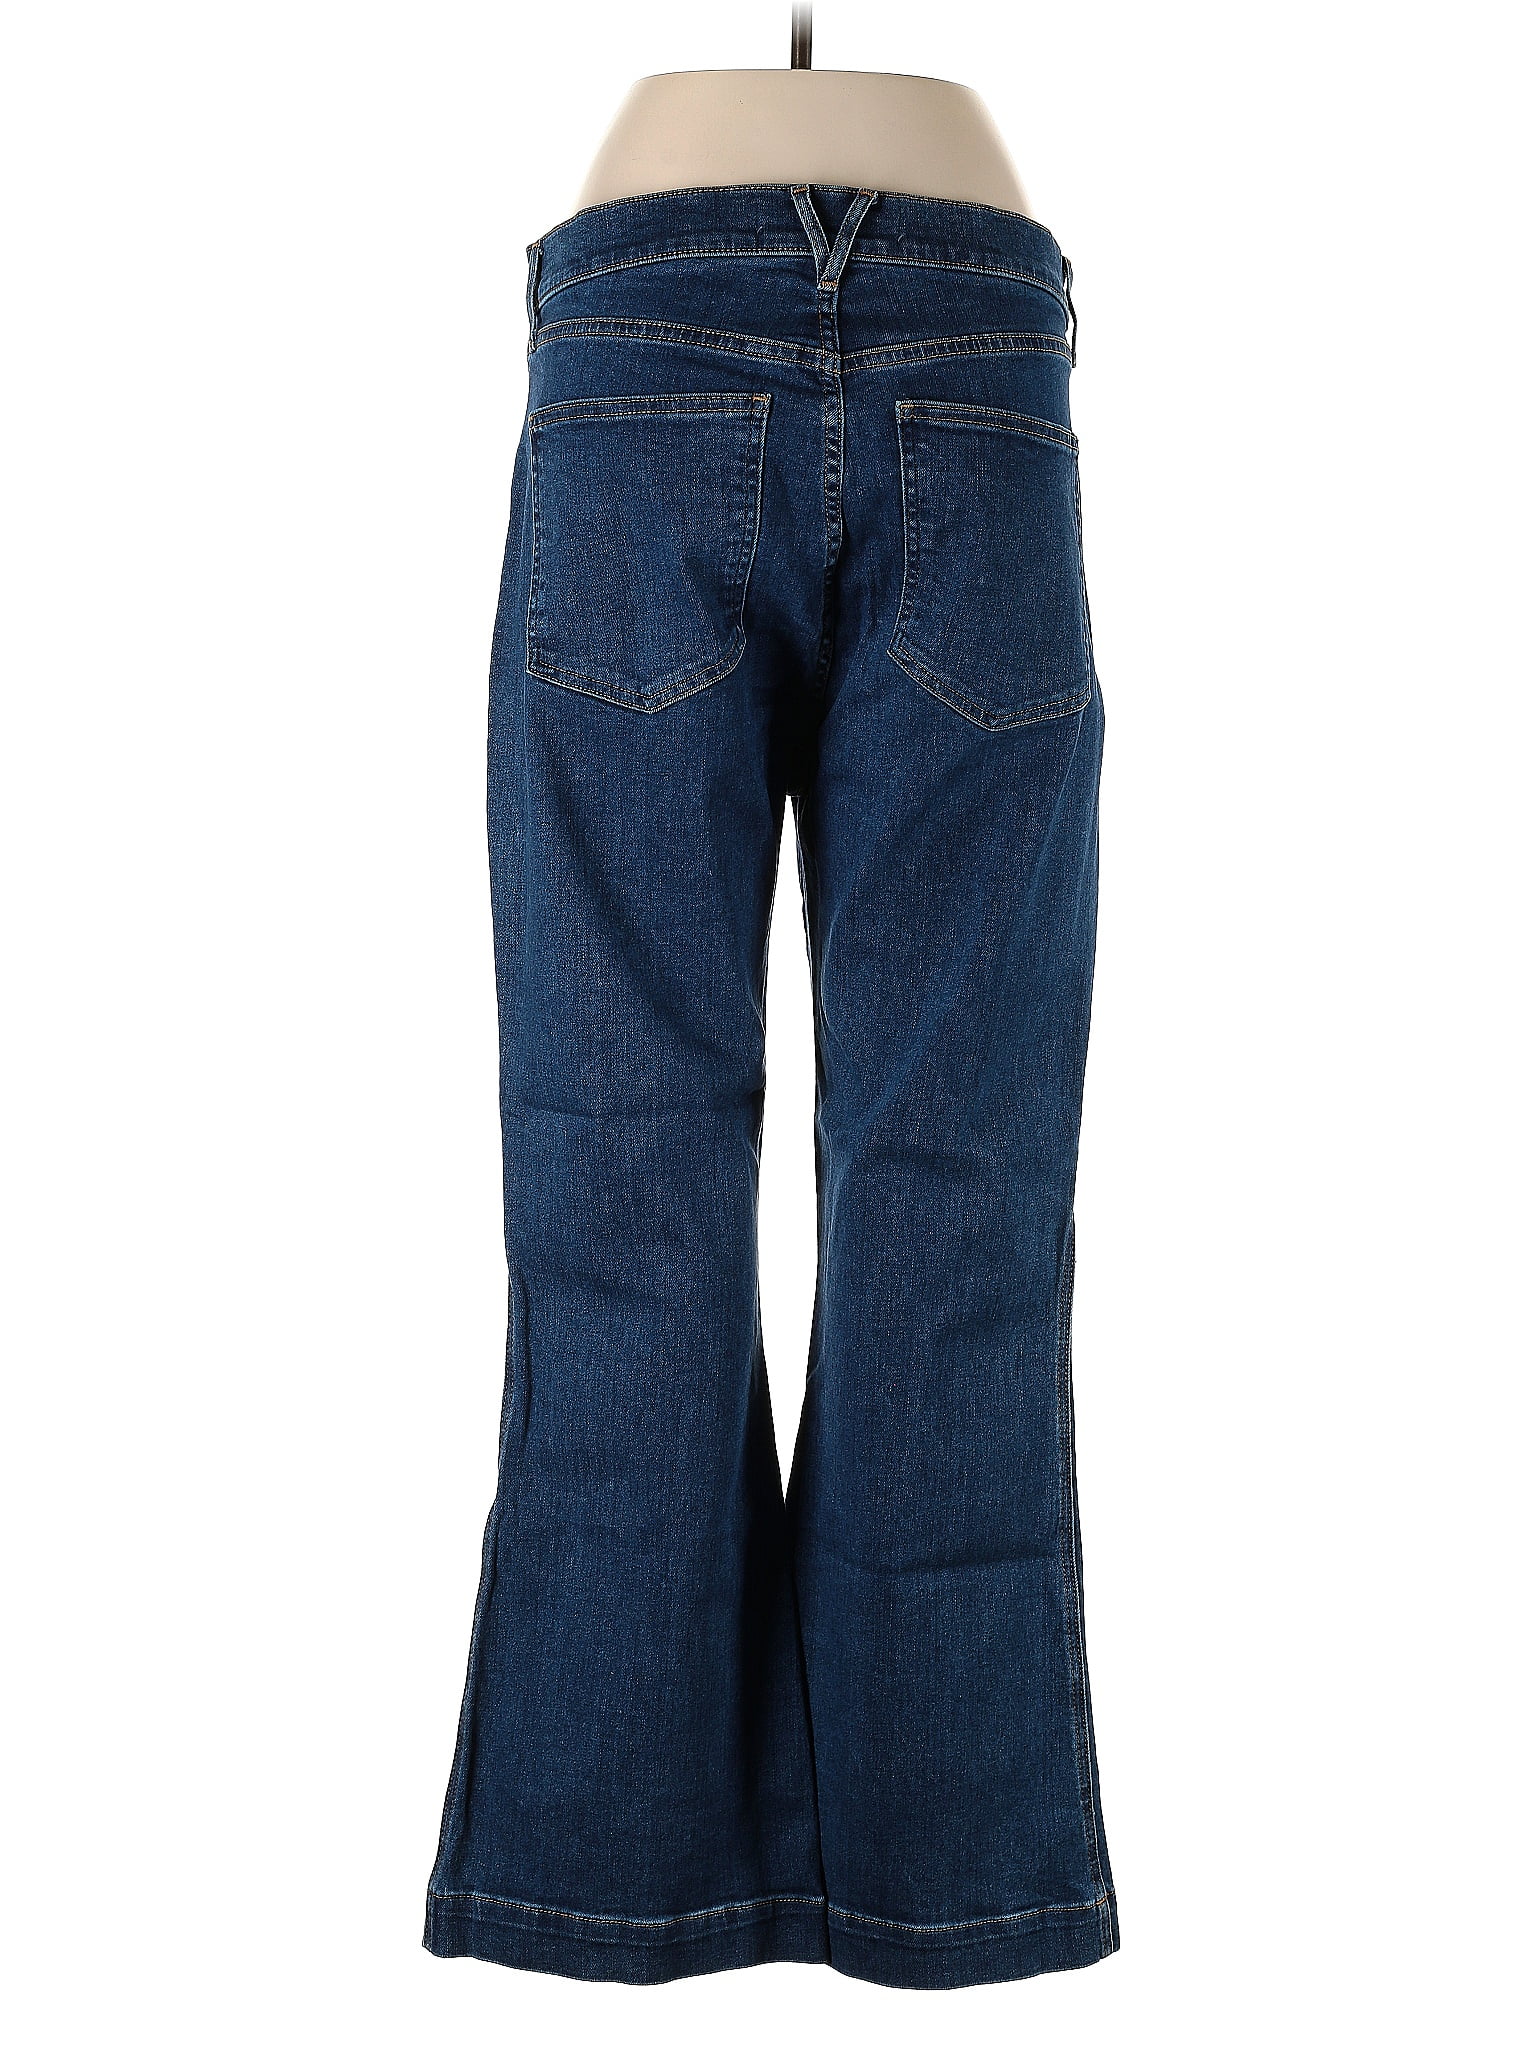 Pilcro and The Letterpress Solid Blue Denim Shorts 30 Waist - 76% off